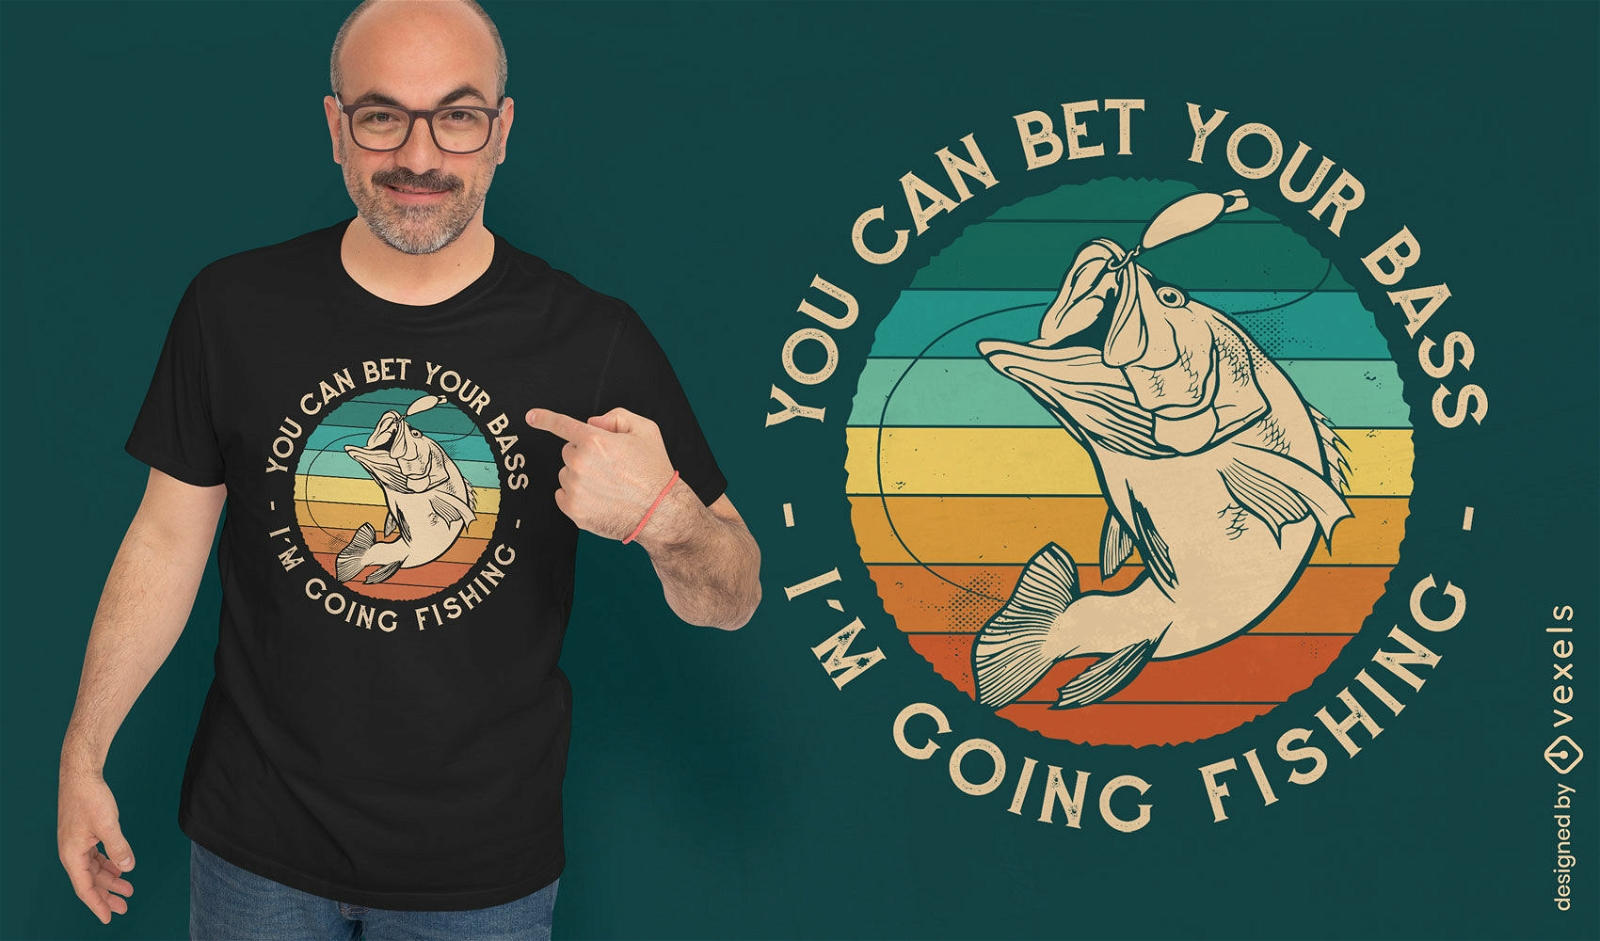 https://images.vexels.com/media/users/3/333685/raw/00e62f1f374e9c0e56c282379f86144a-cool-fishing-retro-sunset-t-shirt-design.jpg